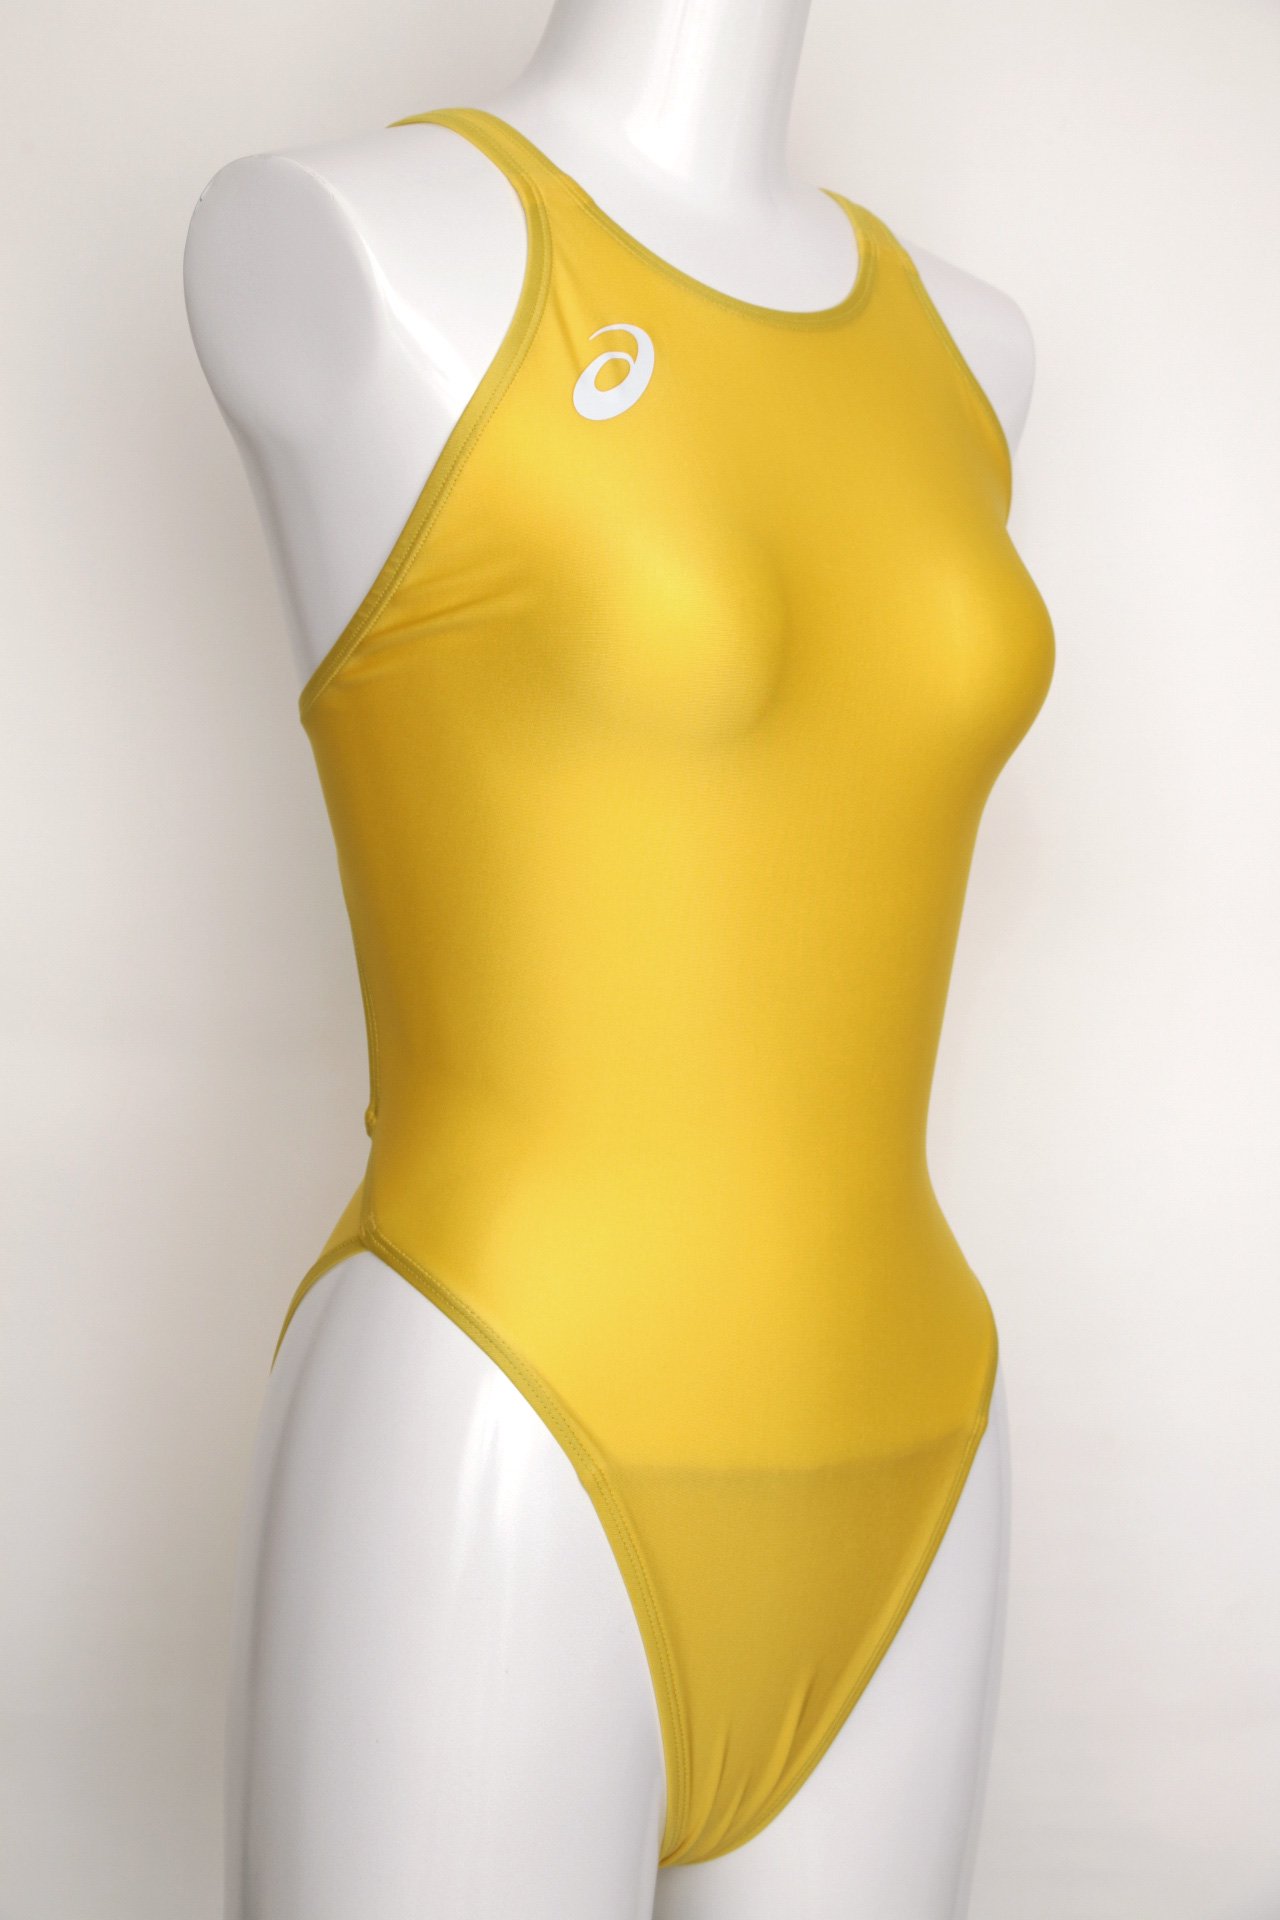 Bespoke Asics Lady's Competition Swimwear Successor to HYDRO-CD High Leg Cut Yellow